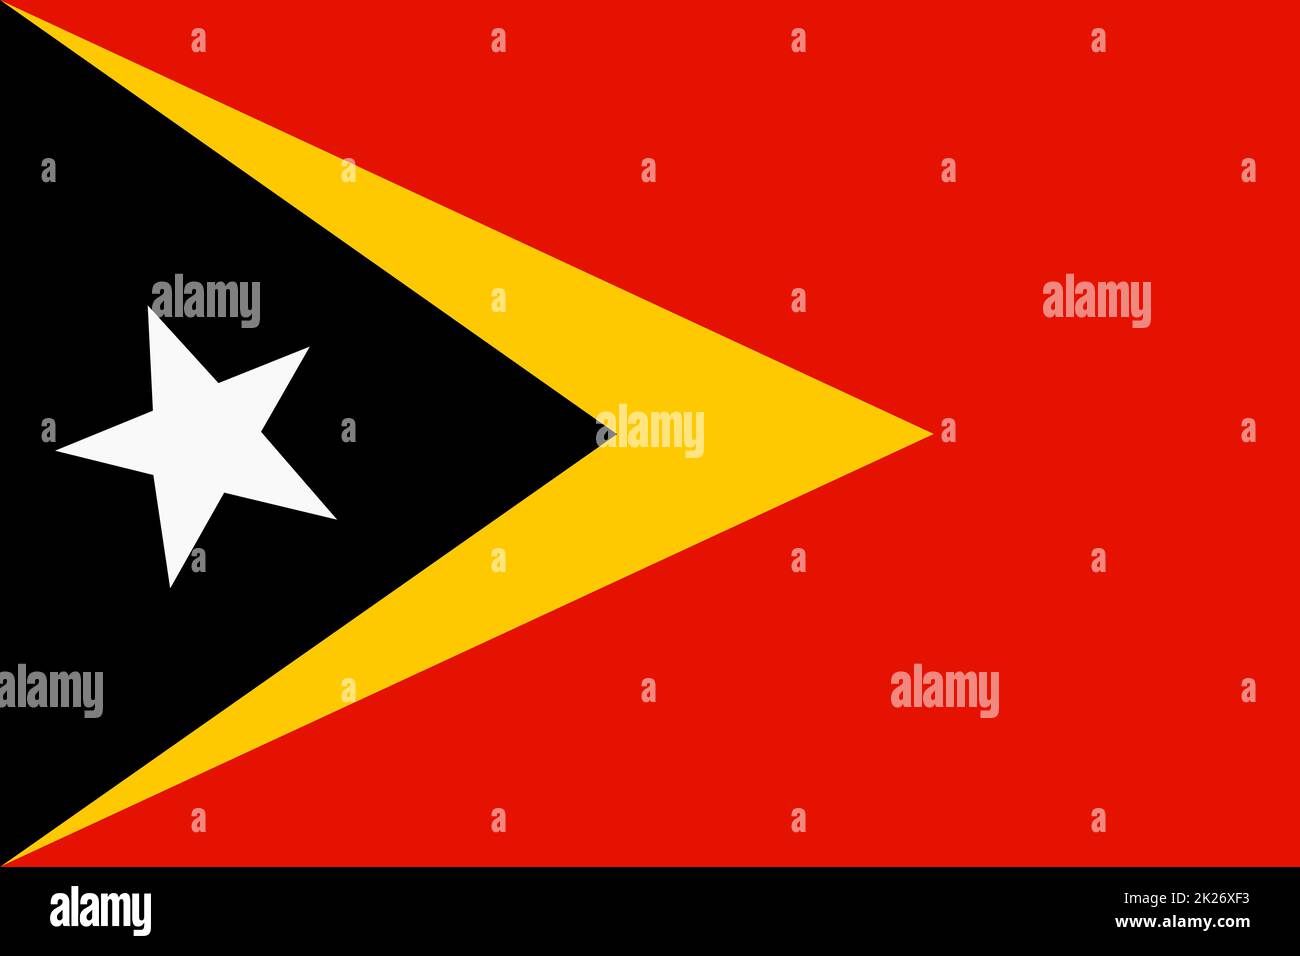 East Timor flag background illustration large file Stock Photo